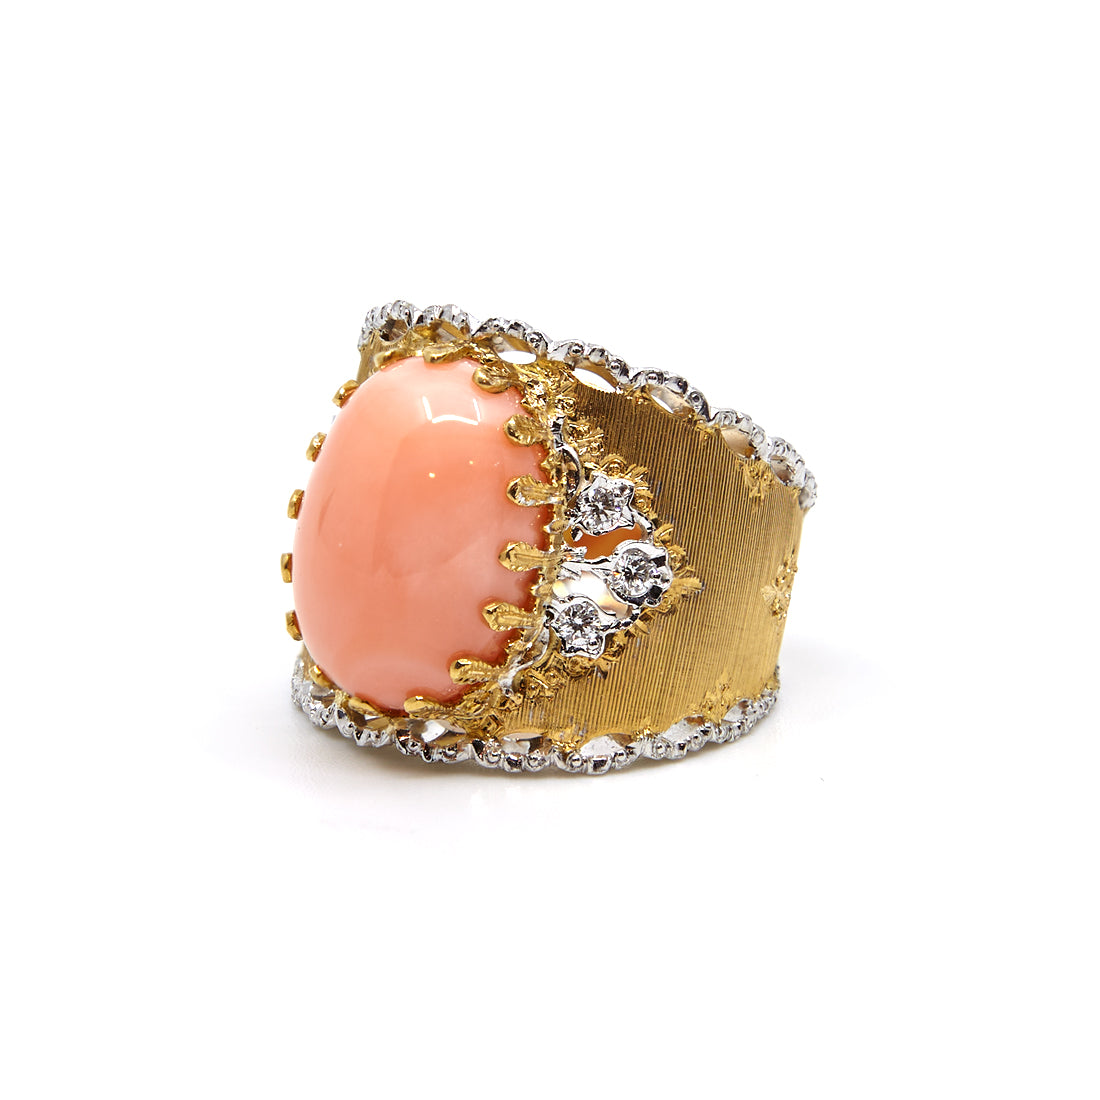 Geel/witgouden ring met koraal en diamant.